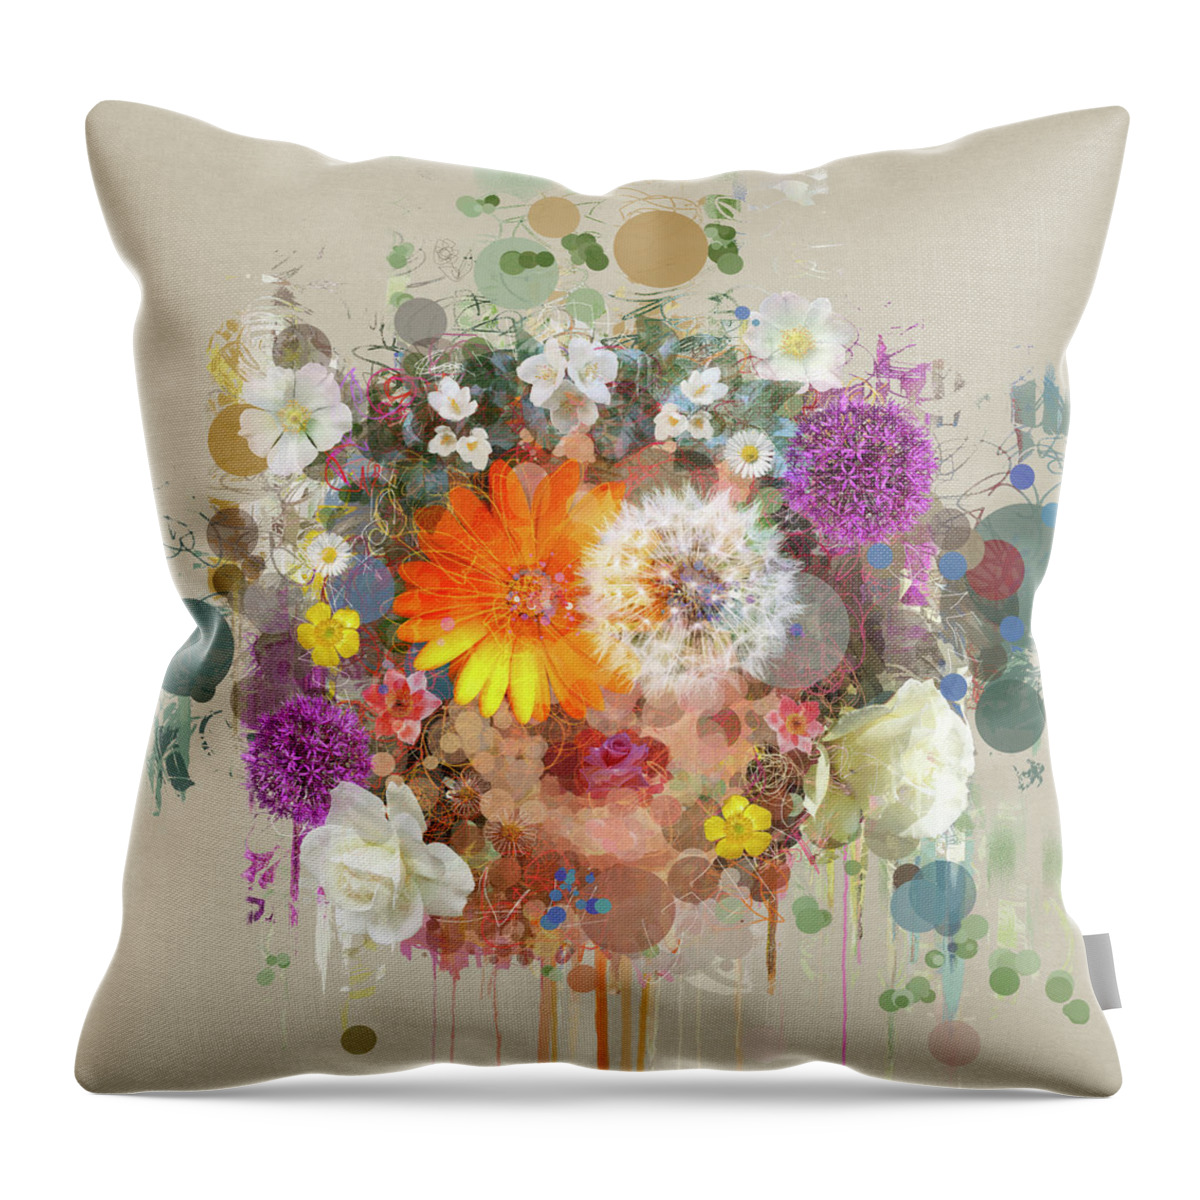 Rose Throw Pillow featuring the mixed media Khloris - Spring Goddess by BFA Prints